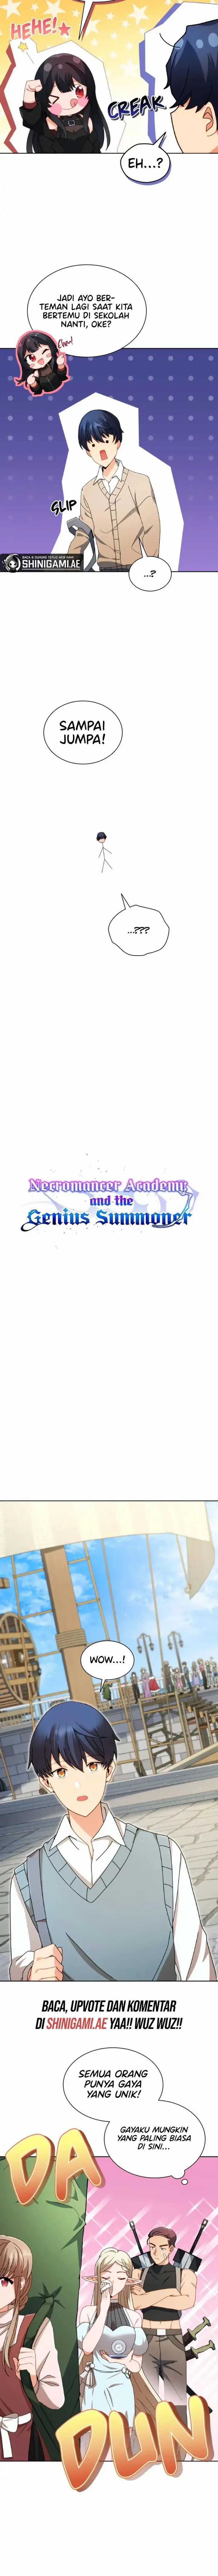 Necromancer Academy’s Genius Summoner Chapter 05